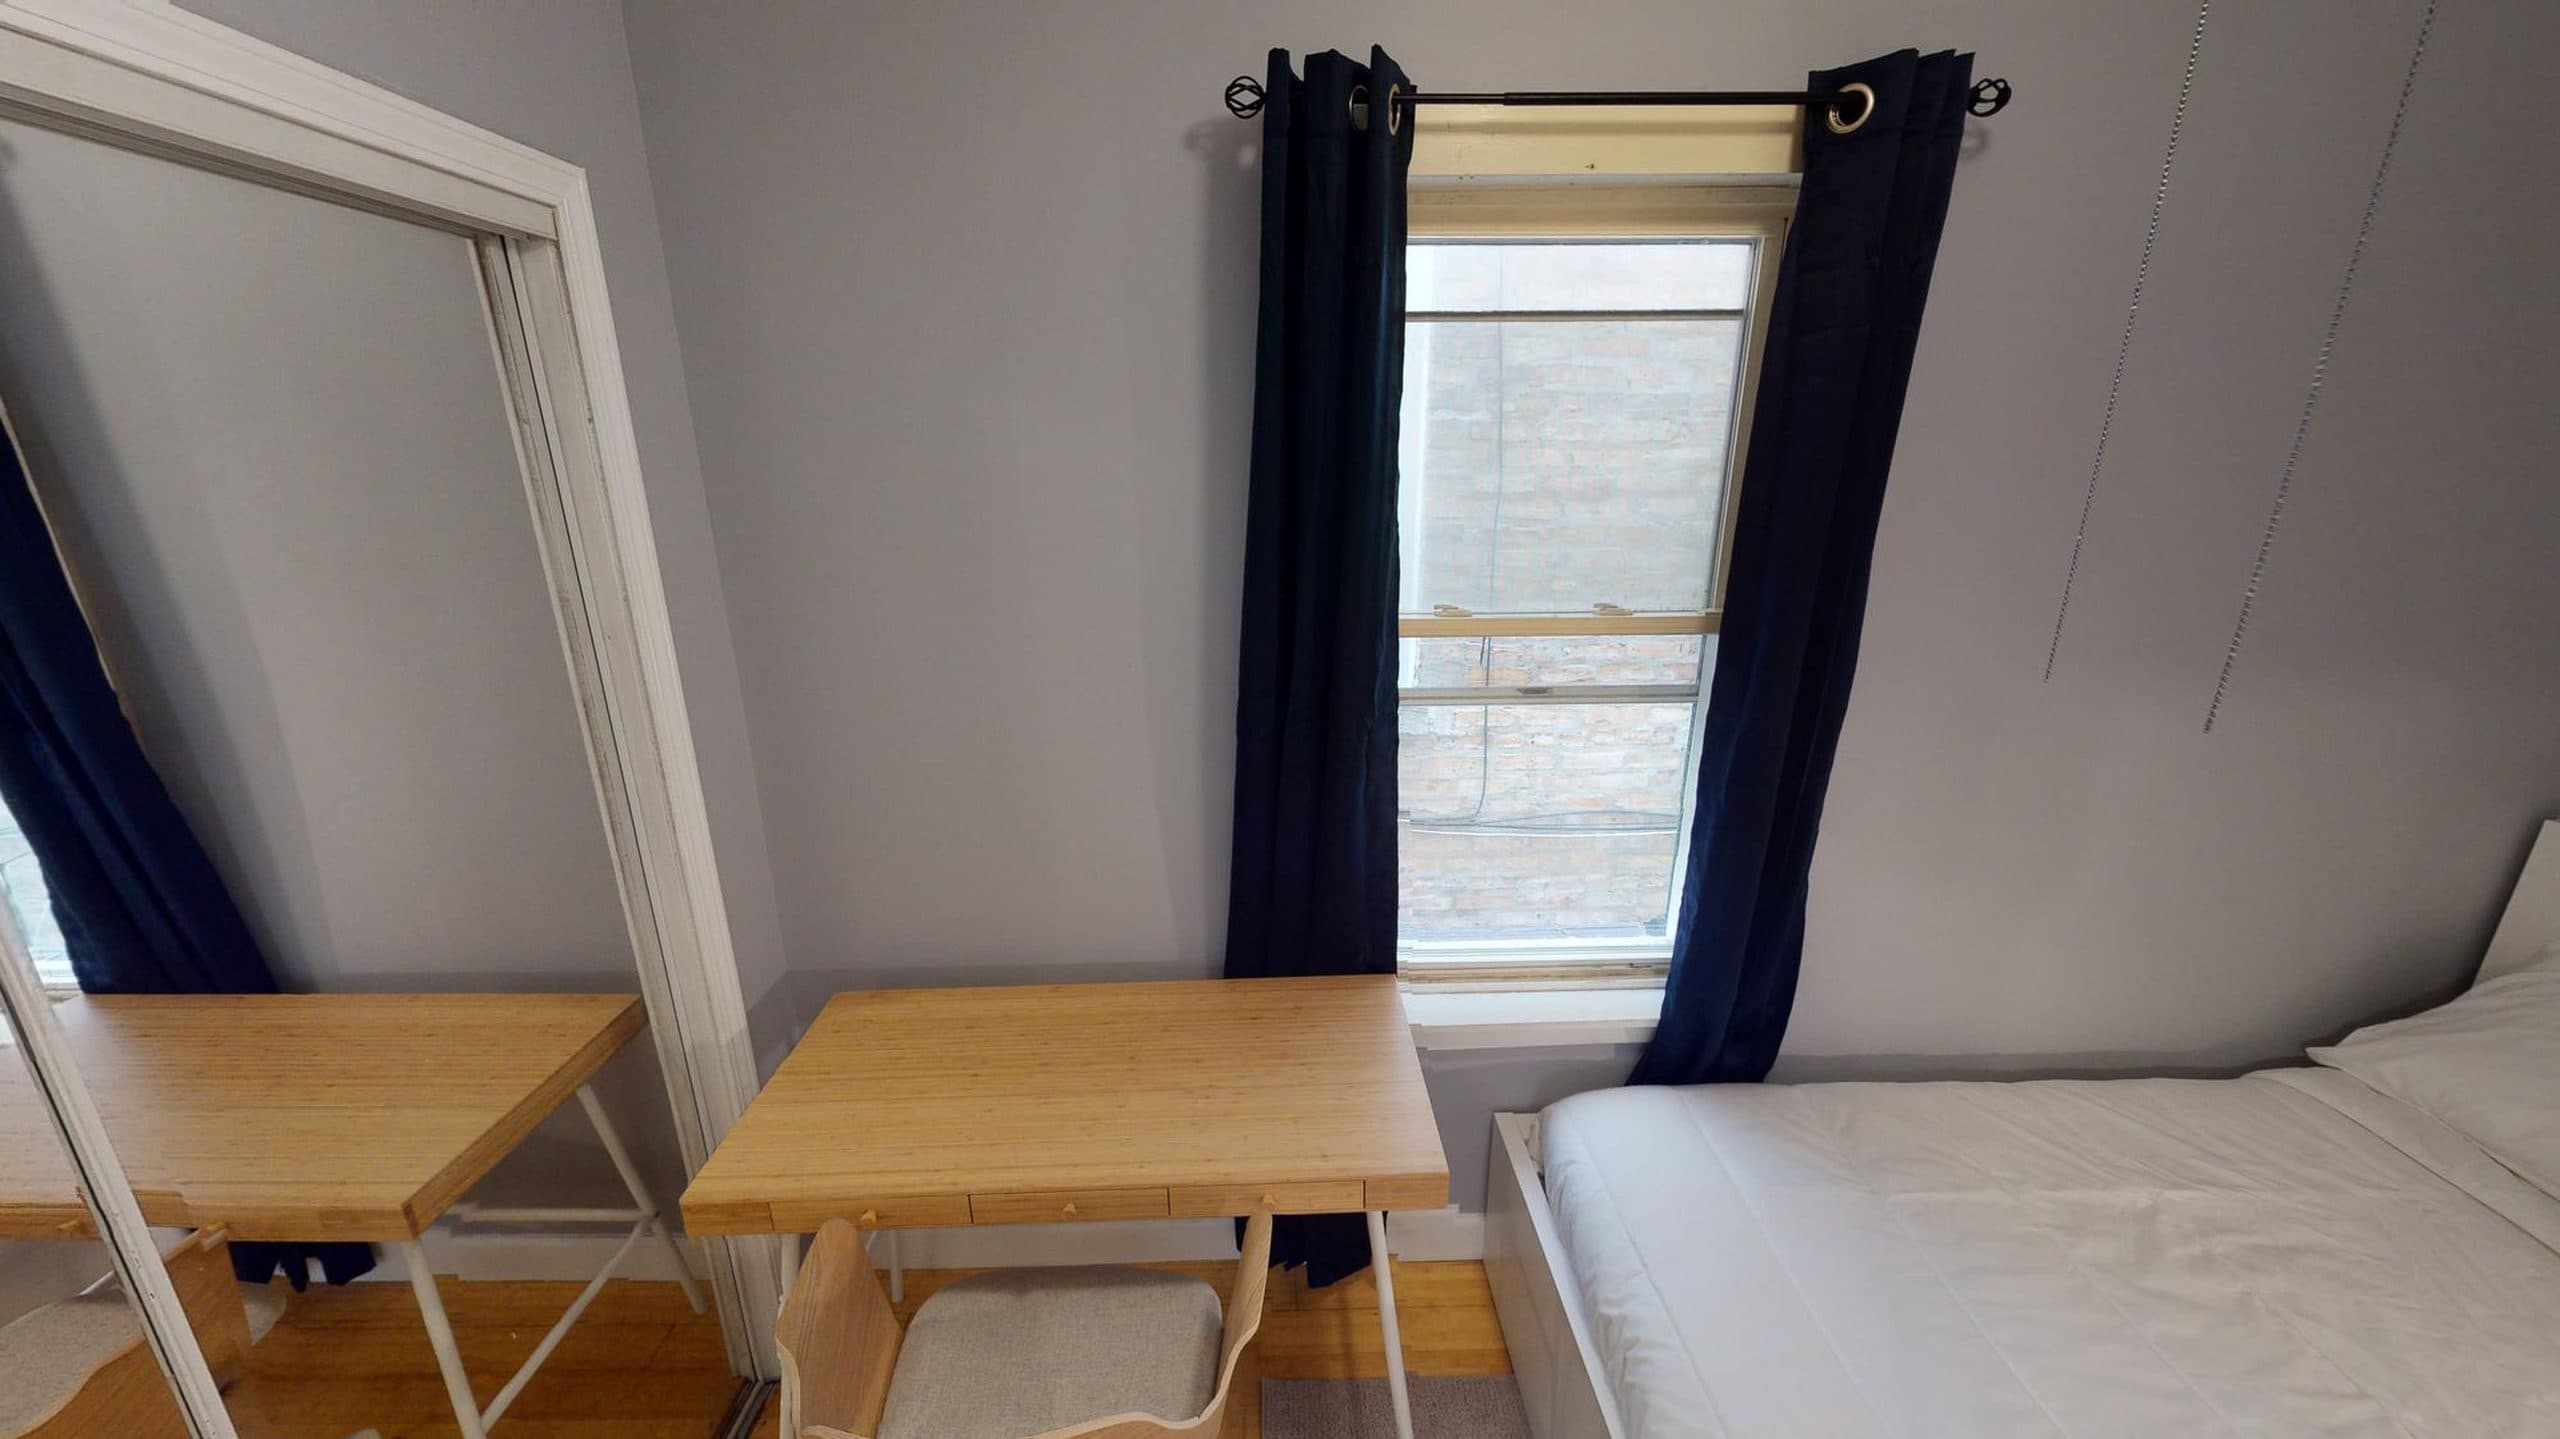 Photo 5 of #3650: Full Bedroom B at June Homes